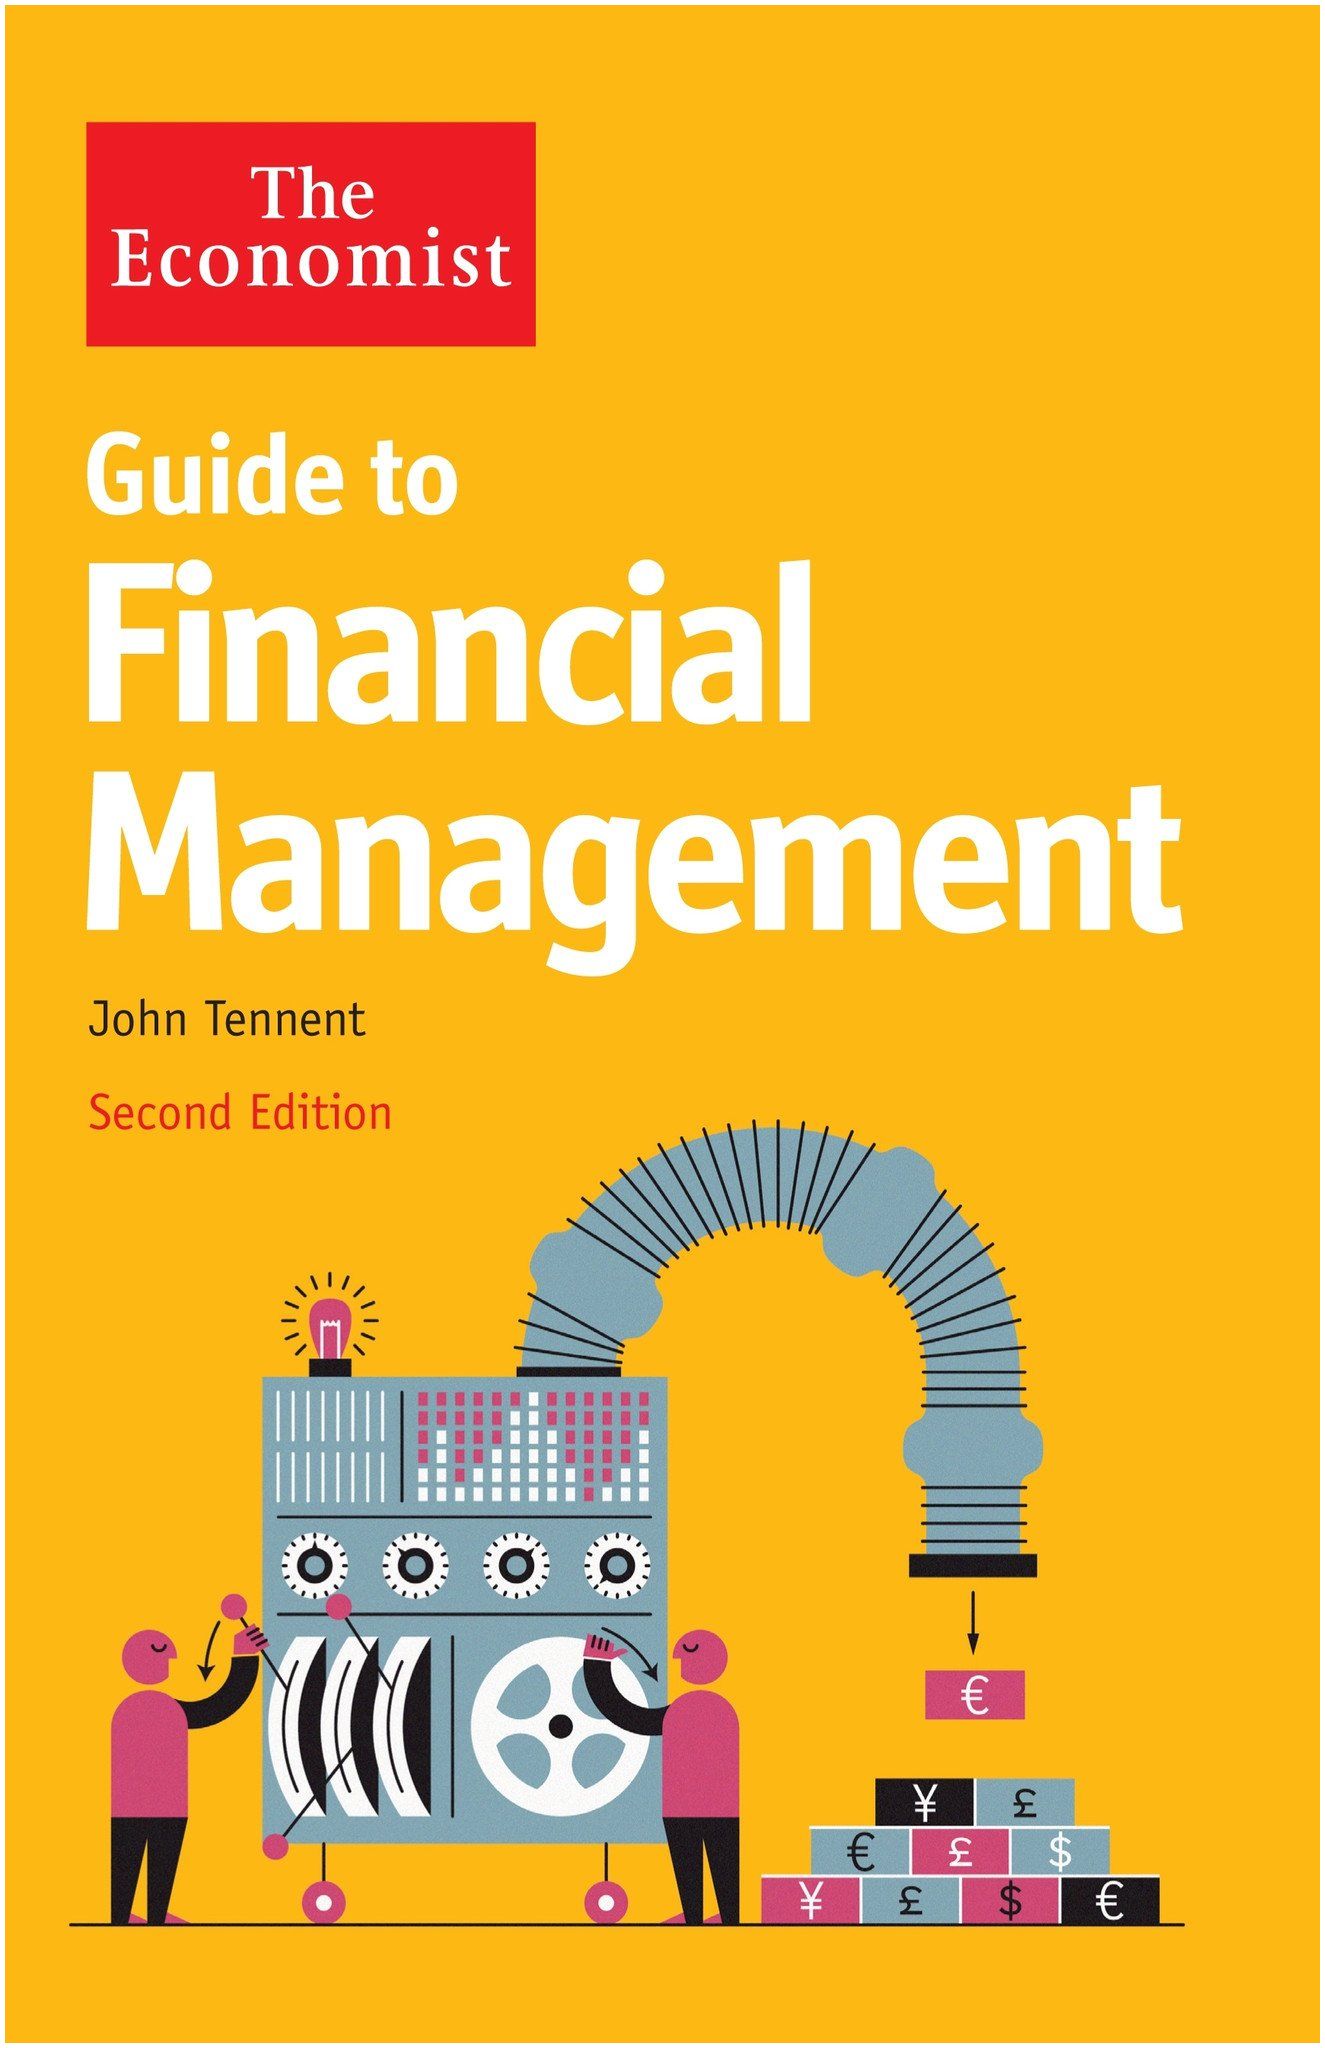 Economist Subscription Management Guide to Financial Management by John Tennent